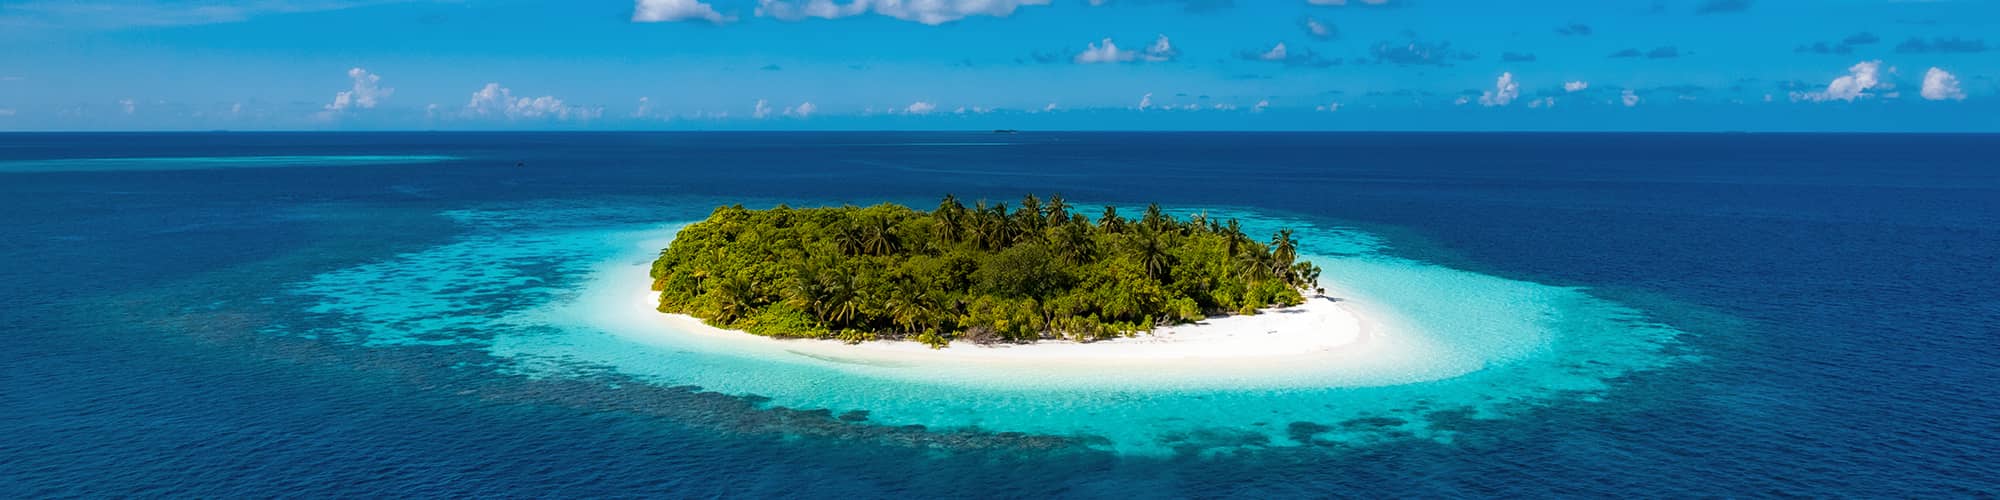 Voyage en groupe Maldives © Freesurf / Adobe Stock